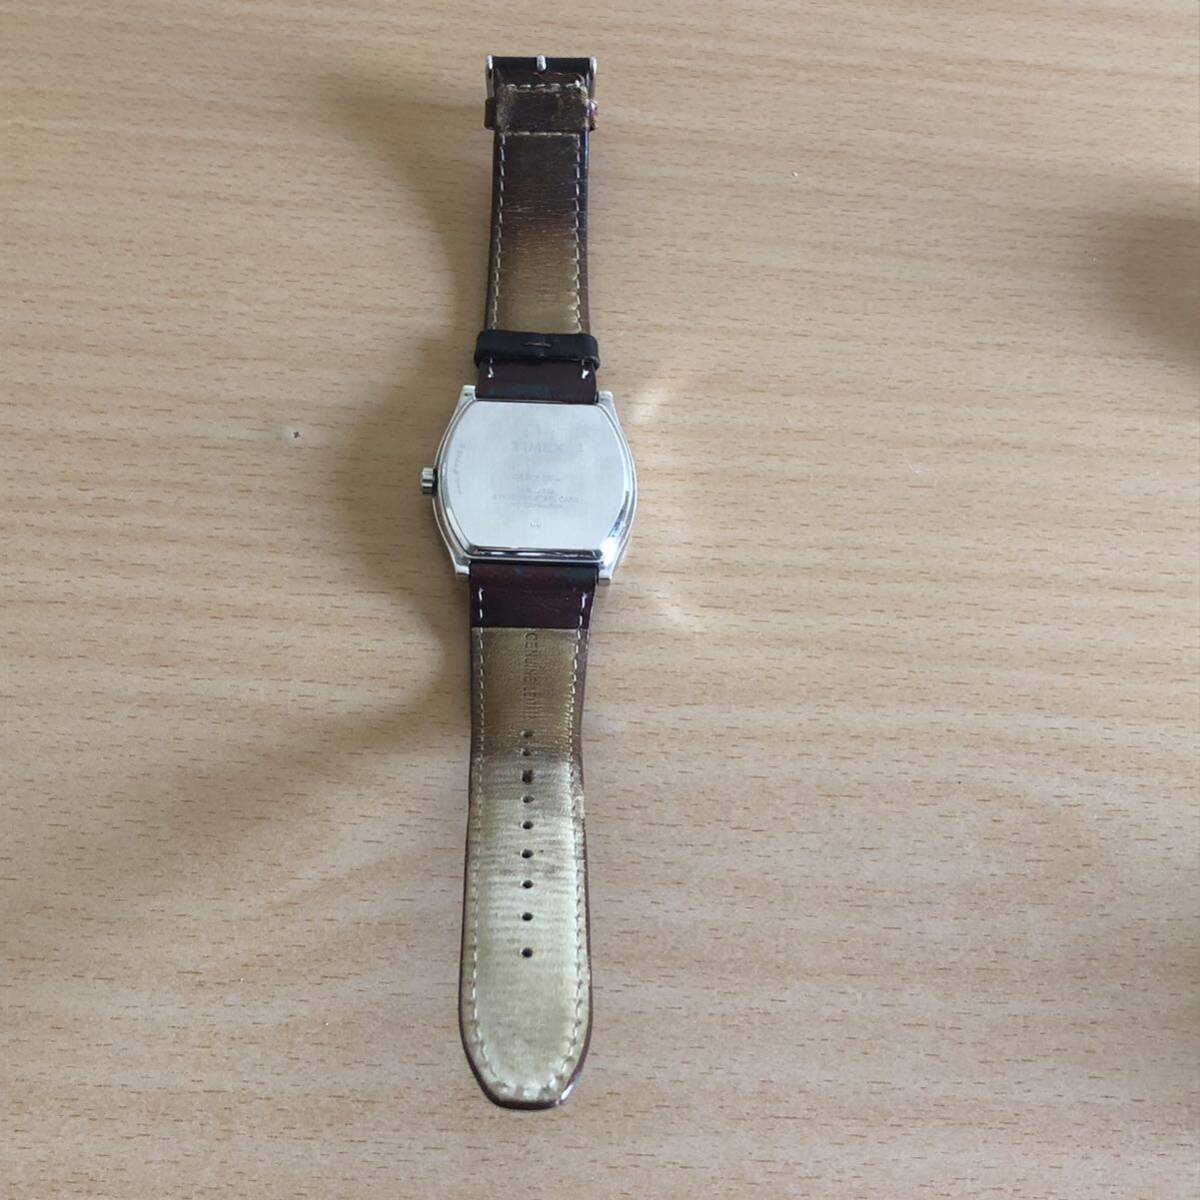 289-0708 TIMEX Timex мужские наручные часы кожа ремень кварц Perpetual календарь MM разряженная батарея работоспособность не проверялась 